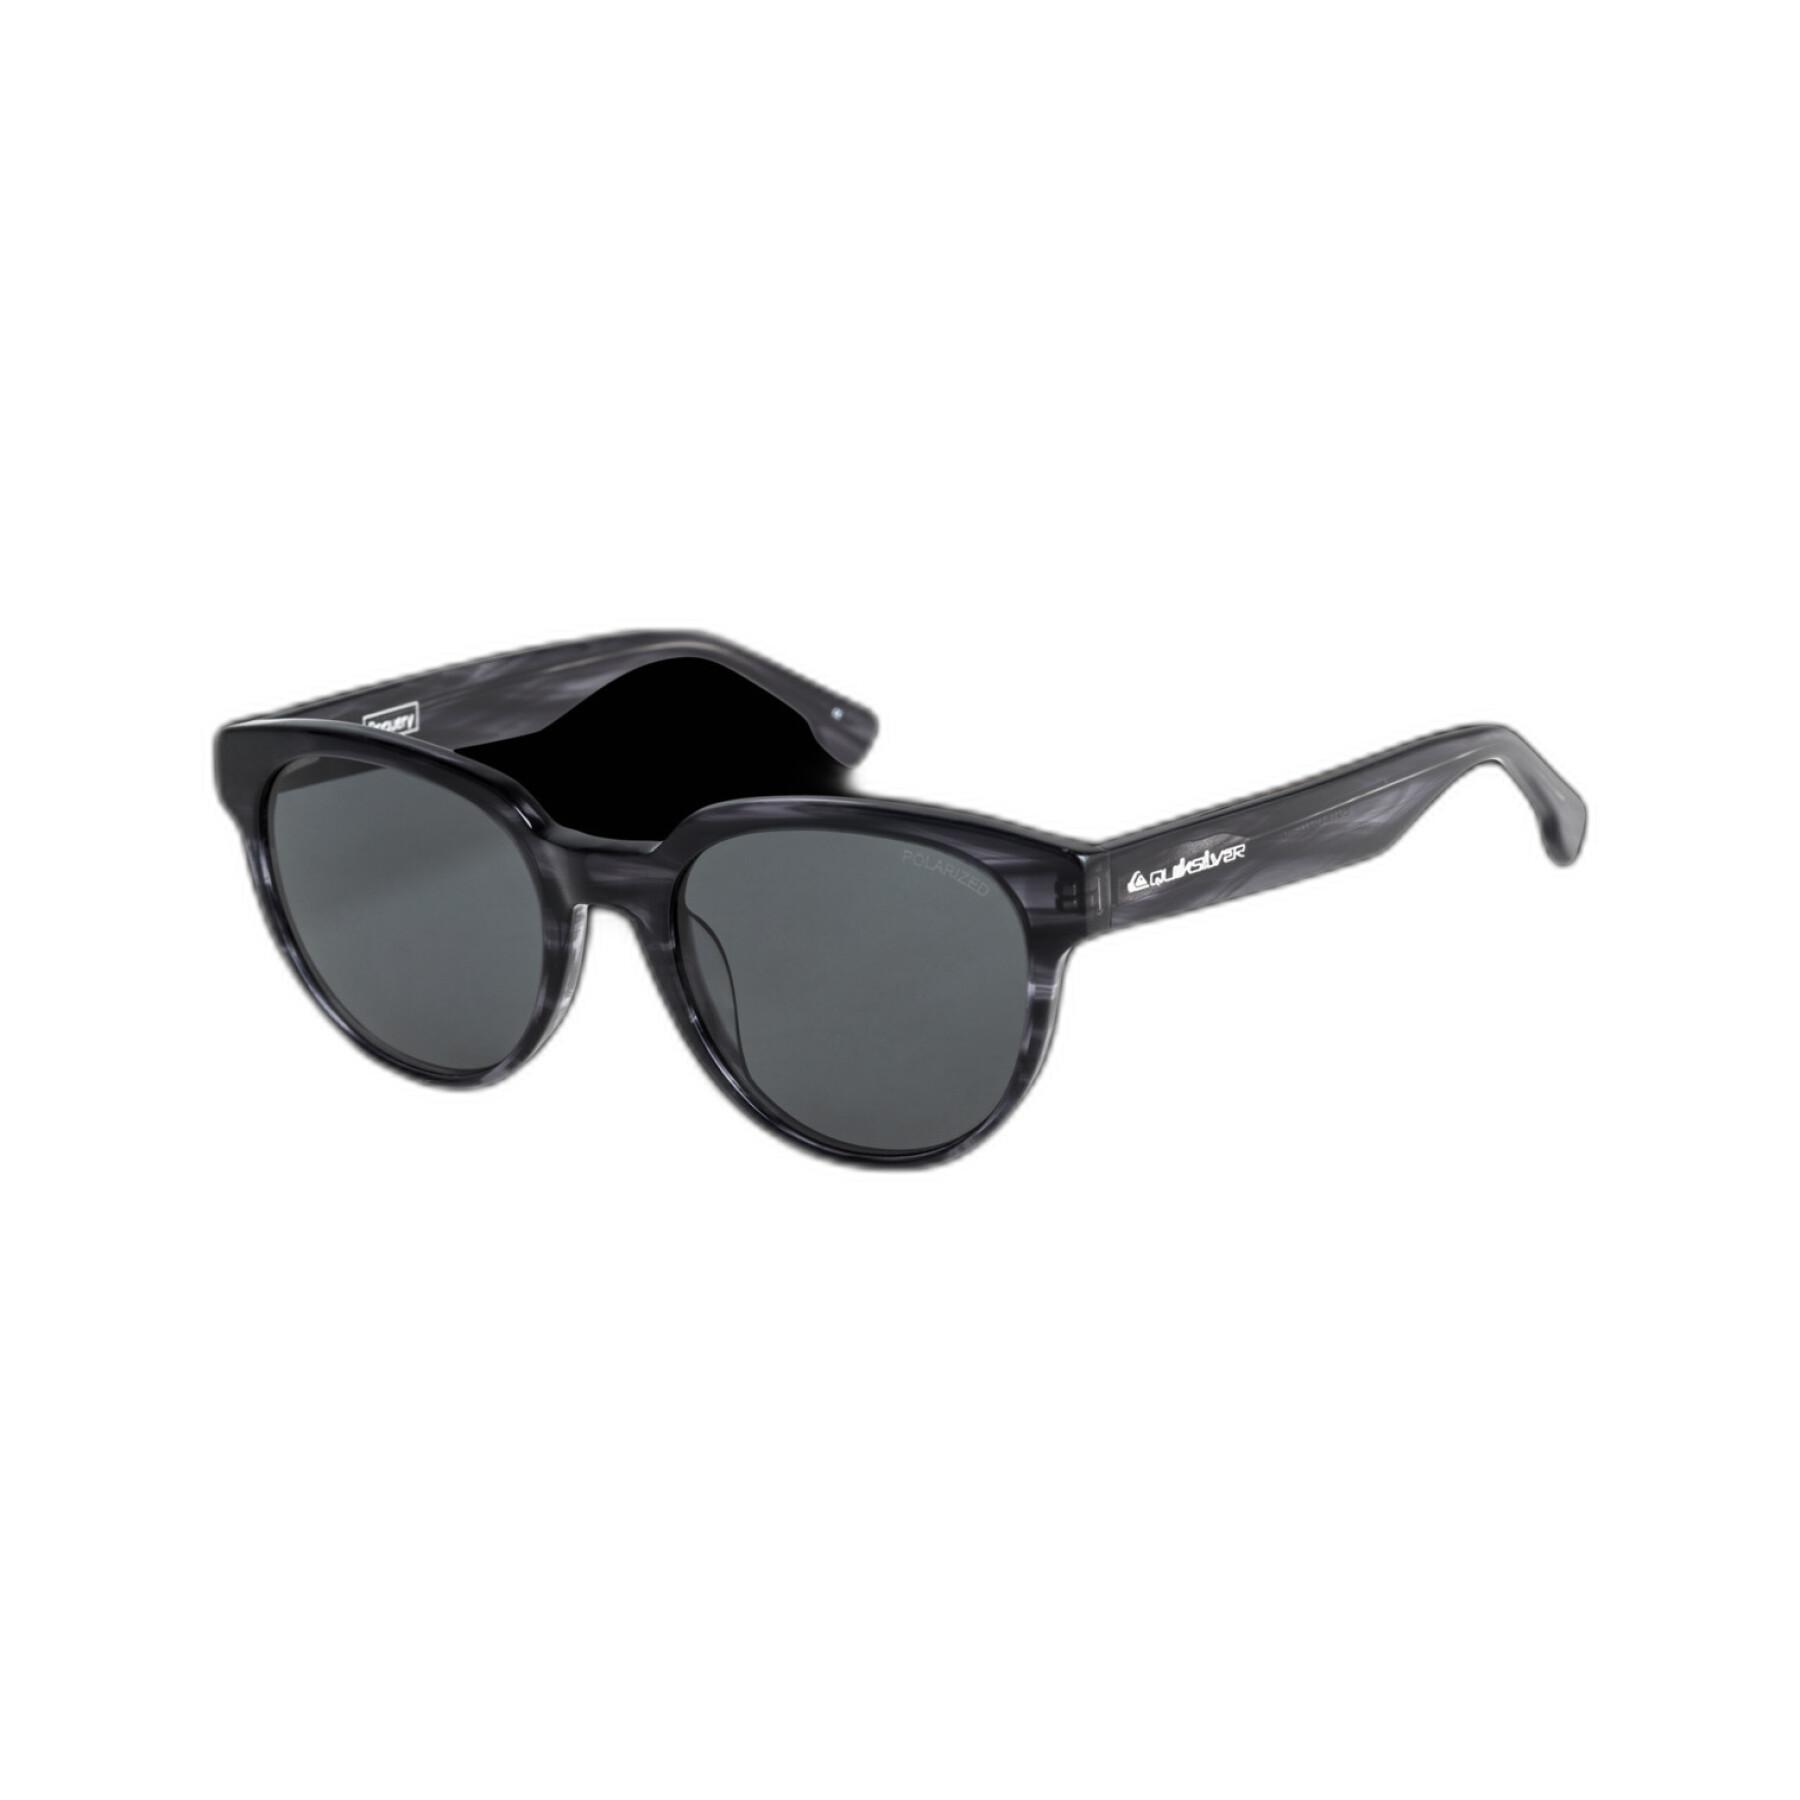 sunglasses Polarized - - Accessories Sunglasses Accessories Roguery Fashion - Quiksilver